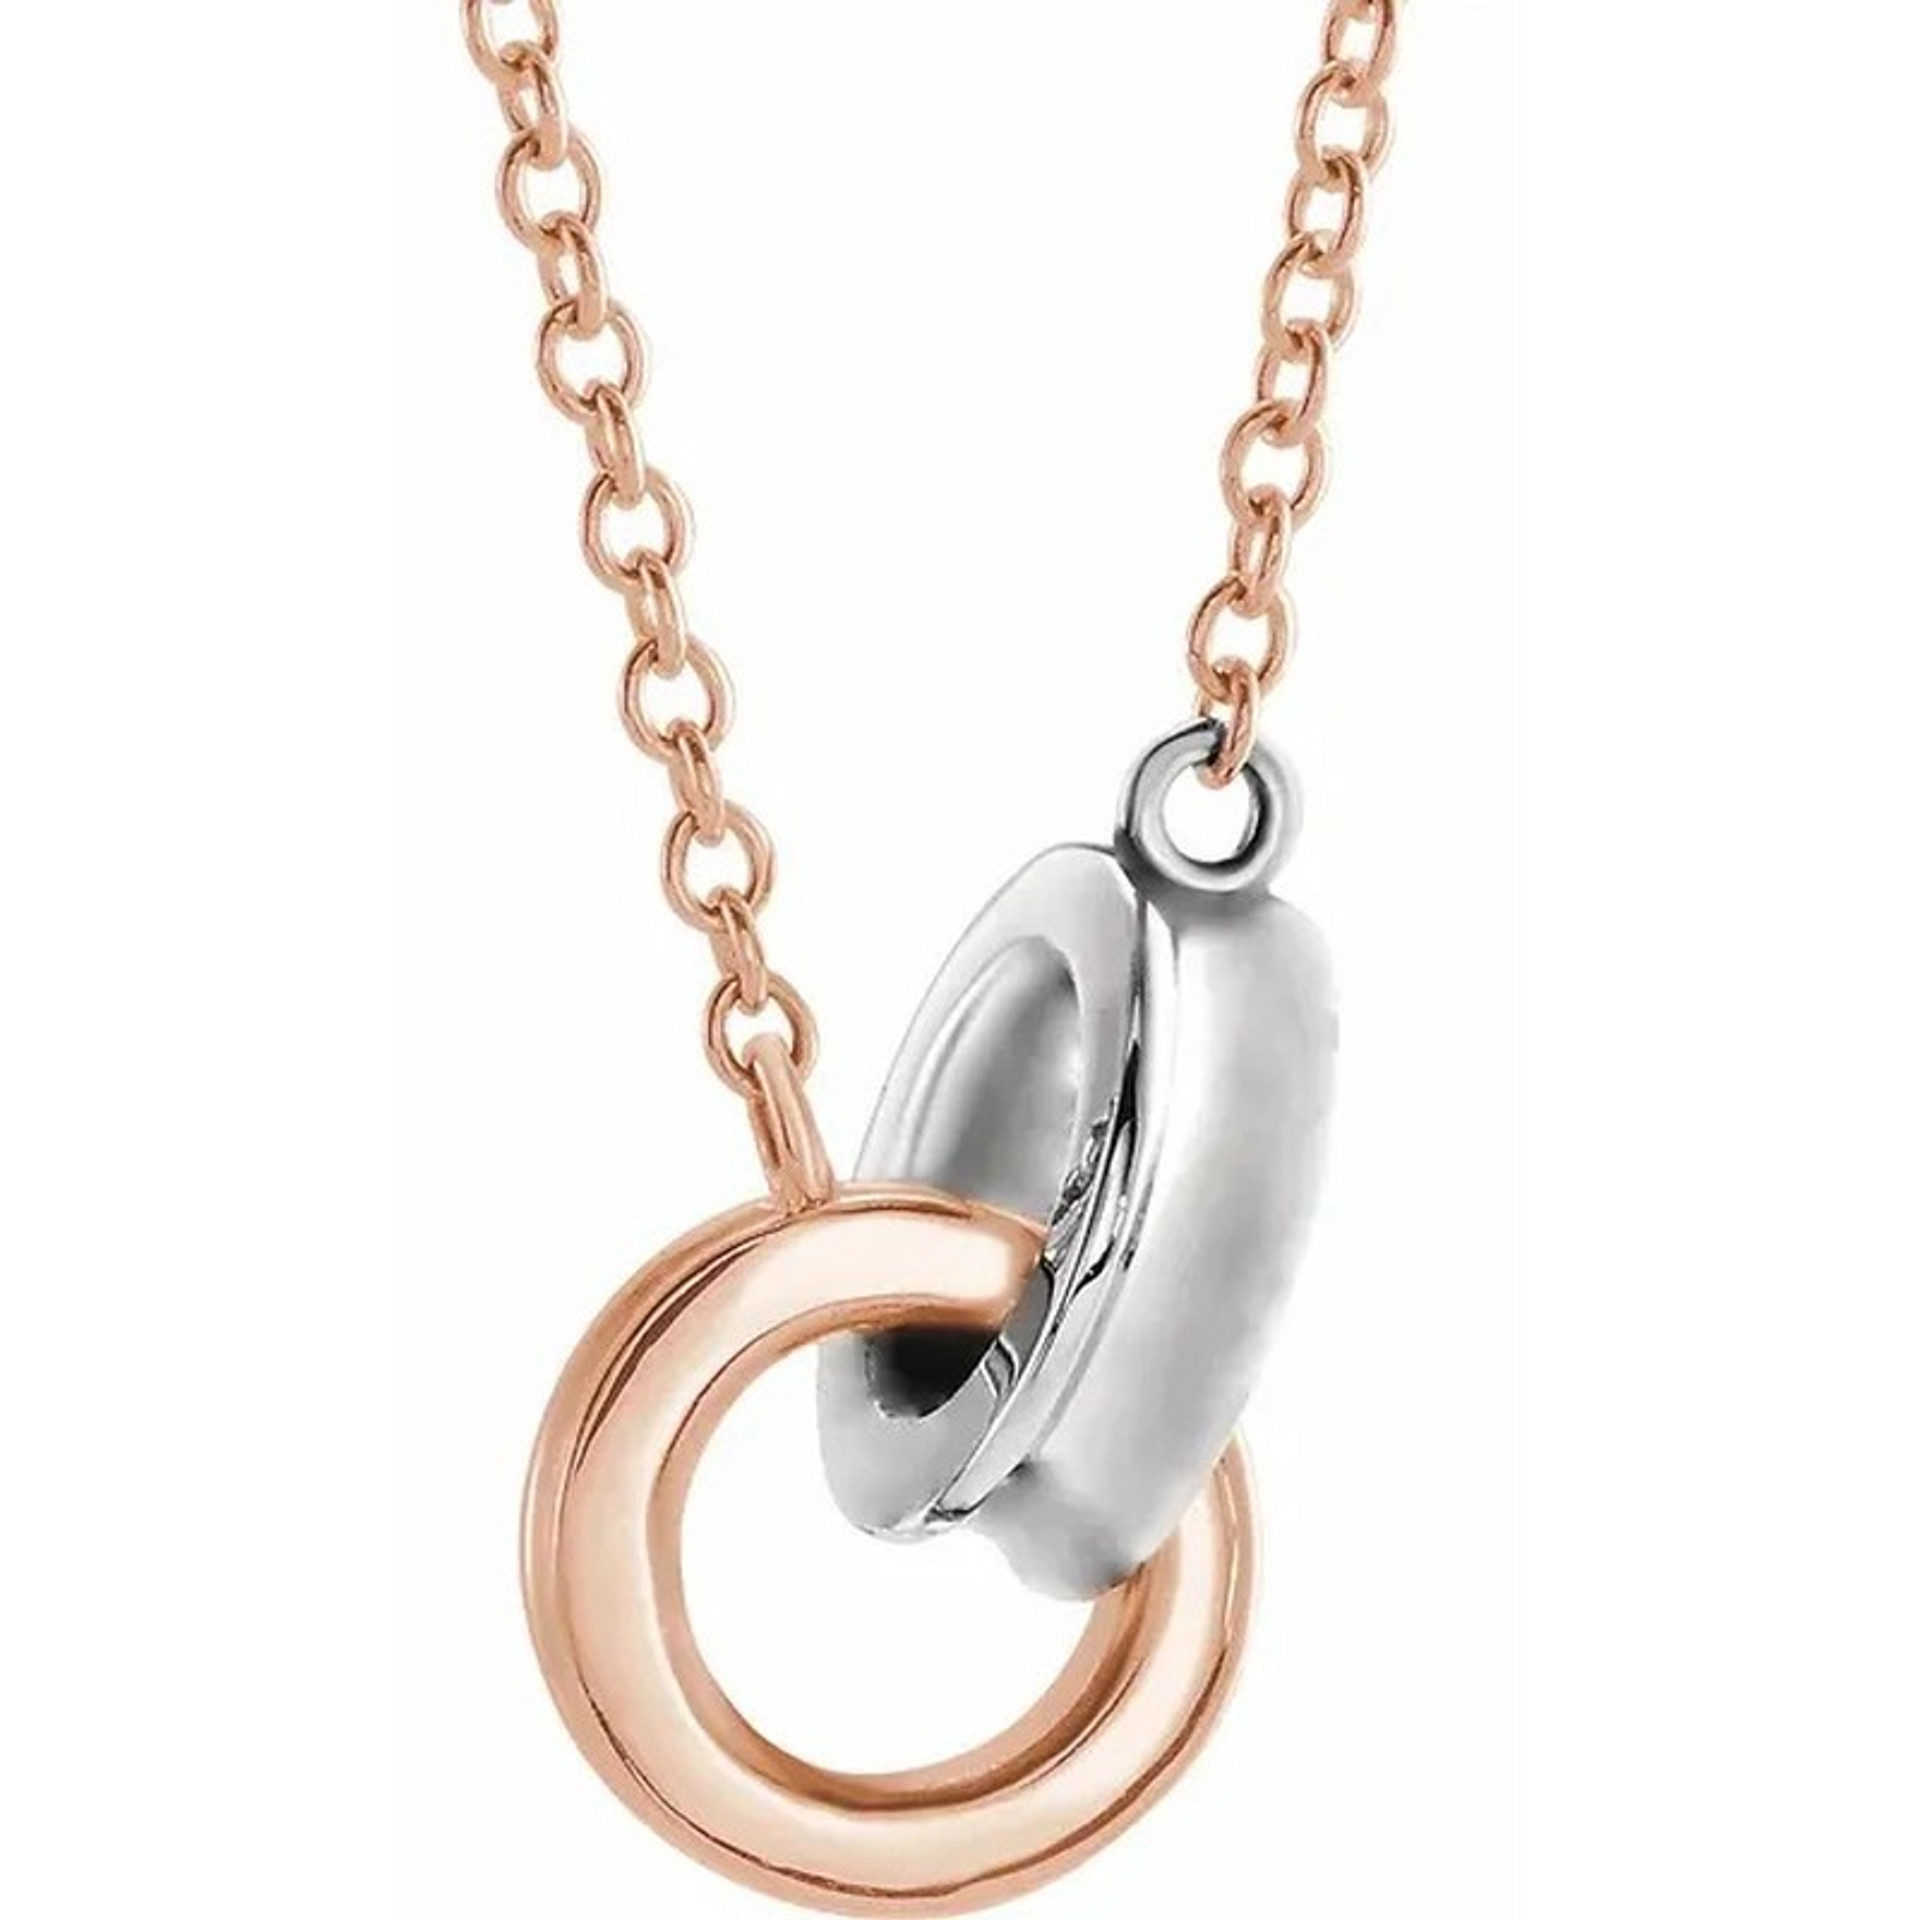 Interlocking Circles Necklace in 14k Two-Tone Gold - DaVinci Emporium